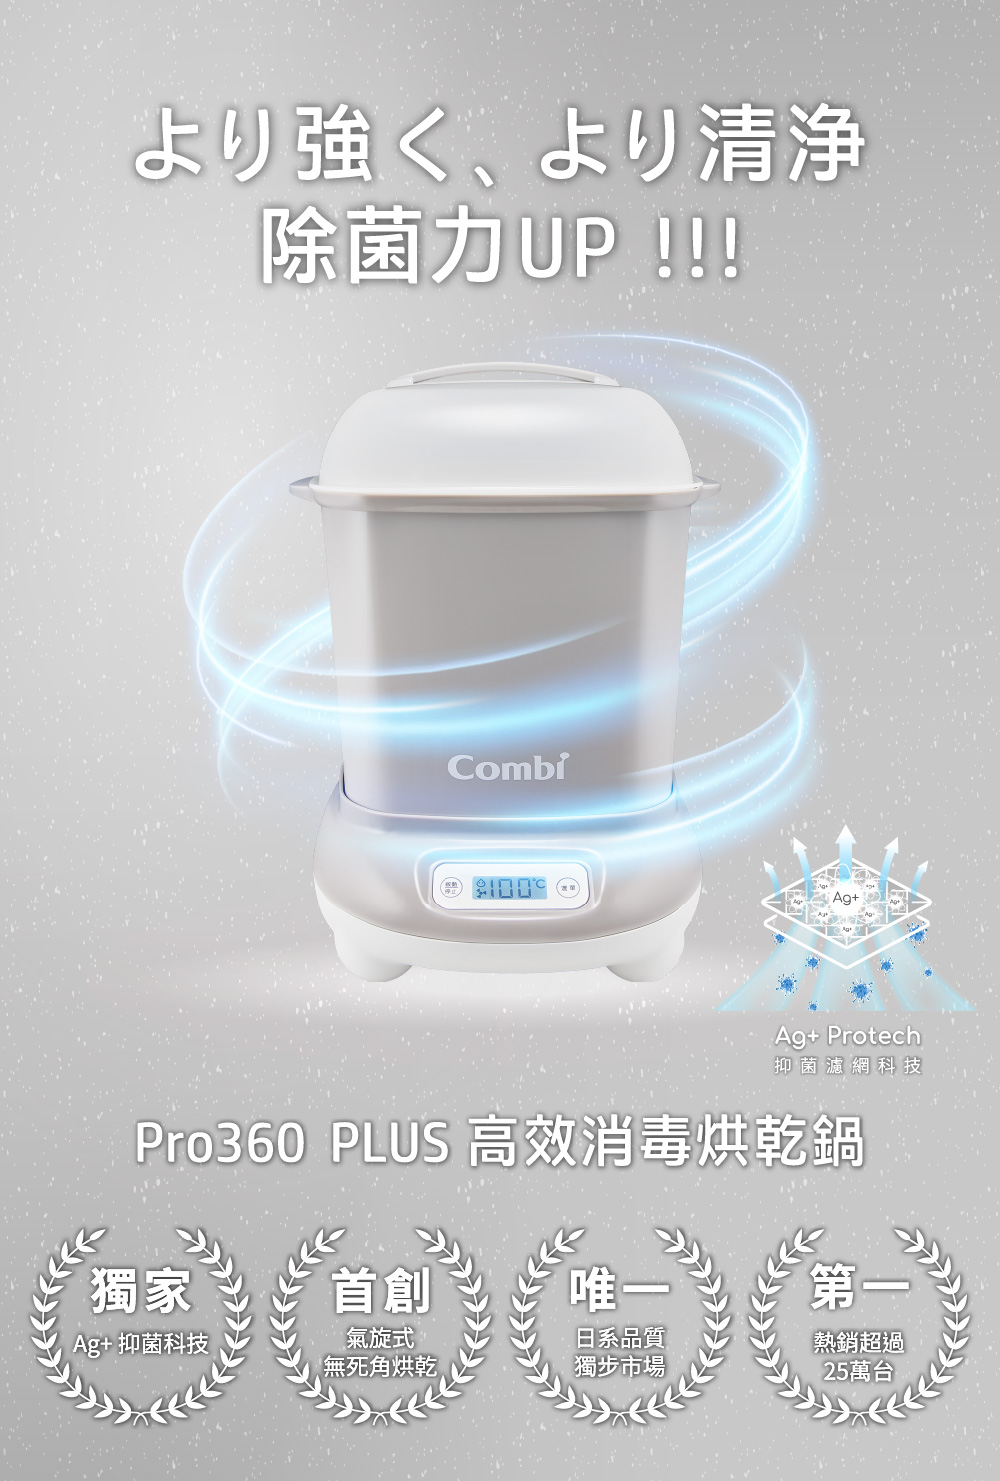 Combi Pro360 PLUS 高效消毒烘乾鍋+保管箱組